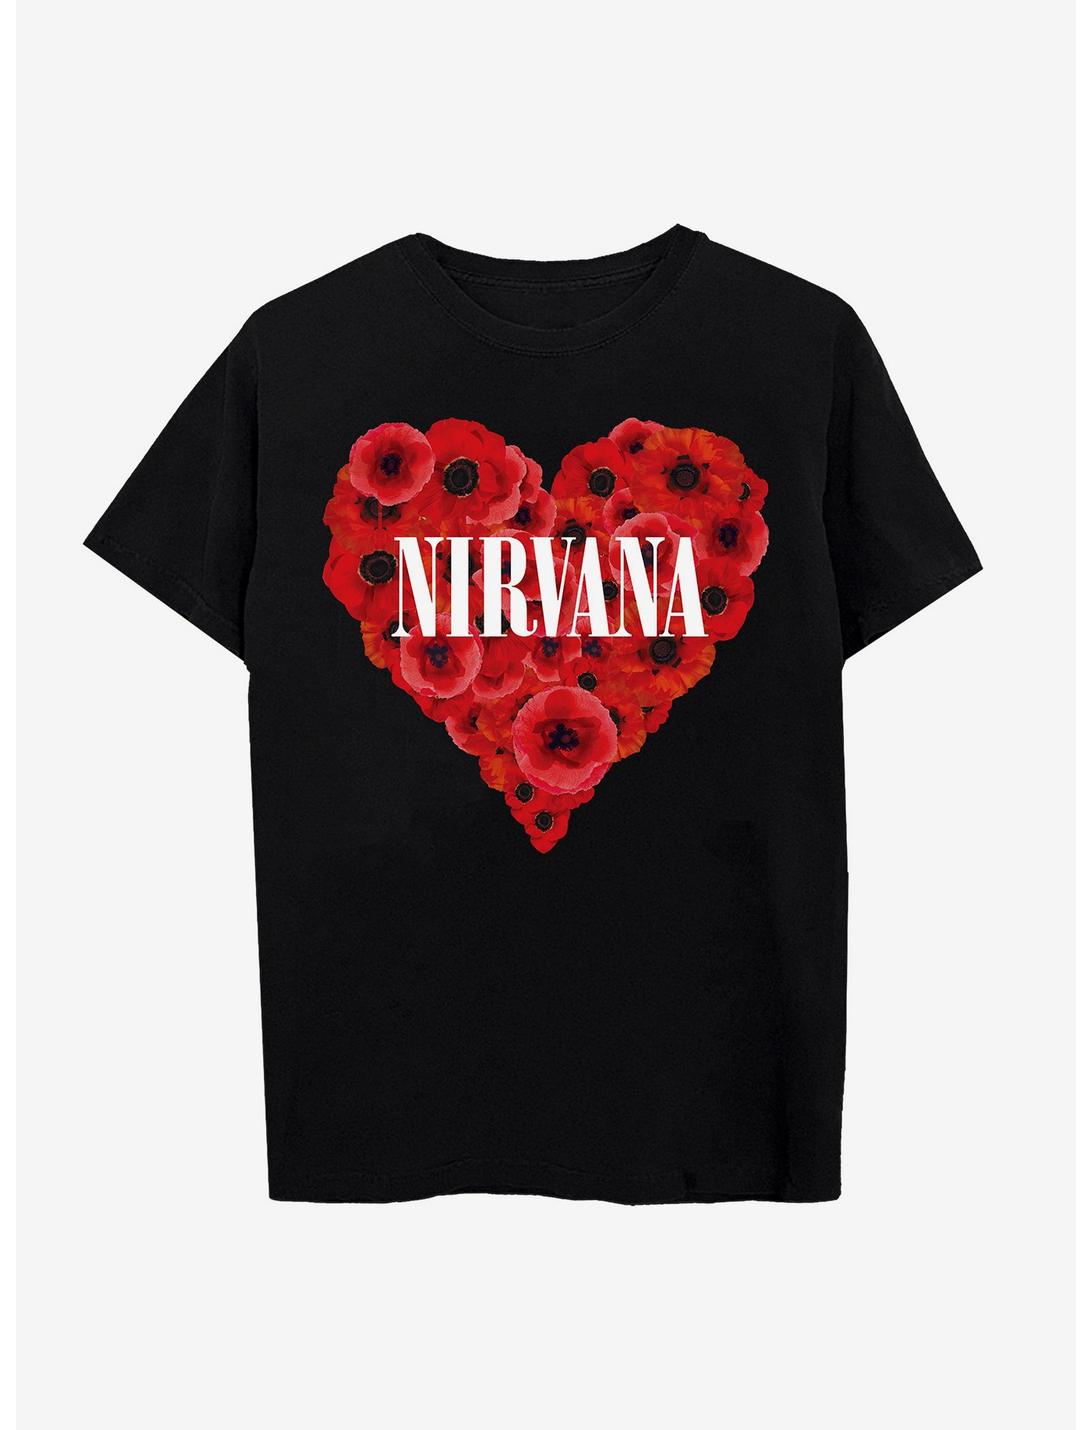 Nirvana Heart Flowers Boyfriend Fit Girls T-Shirt, BLACK, hi-res